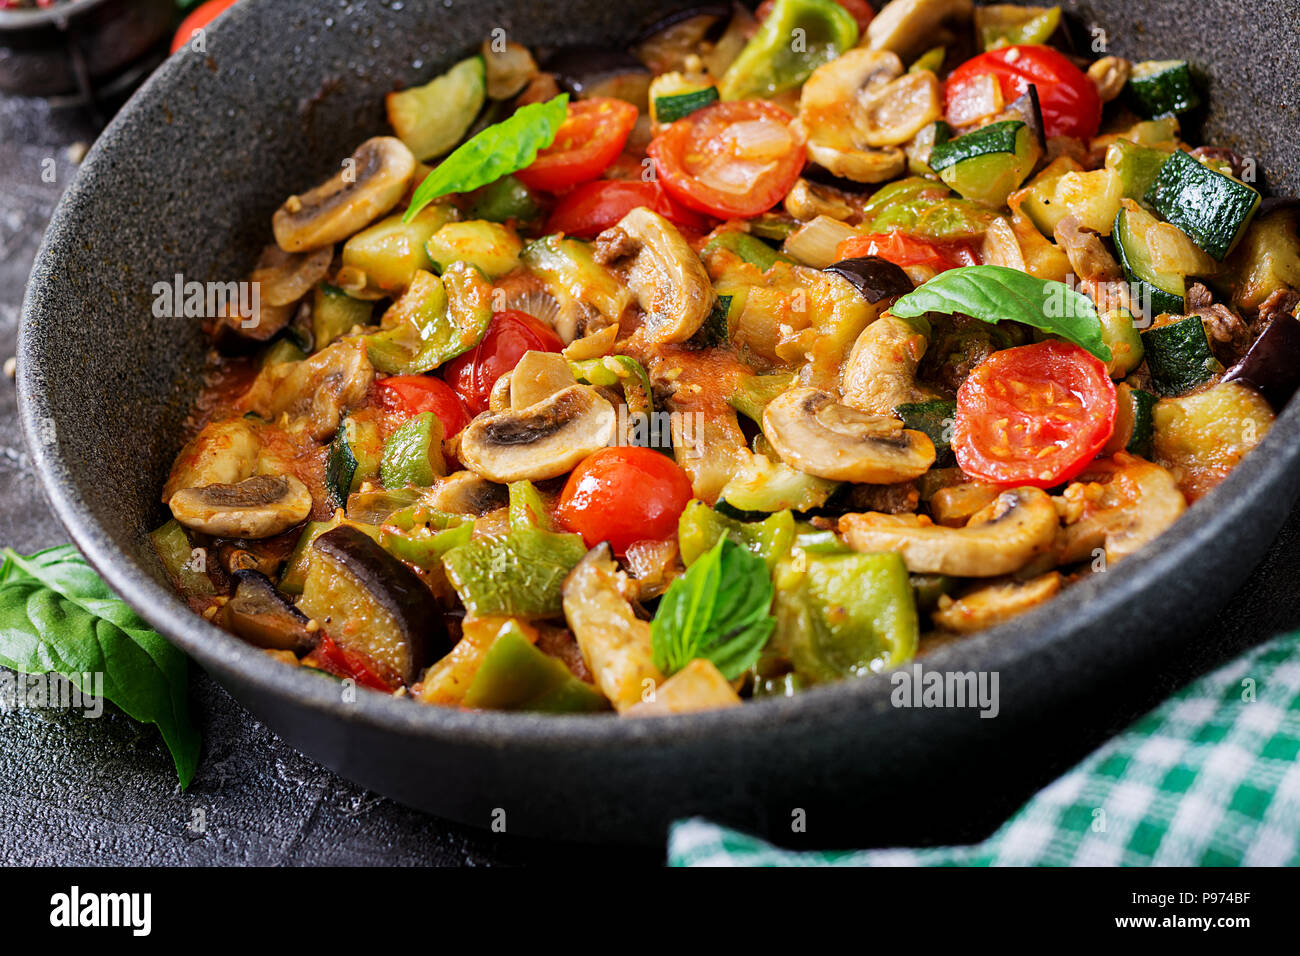 Pikanten Eintopf Auberginen, Paprika, Tomaten, Zucchini und Pilzen  Stockfotografie - Alamy